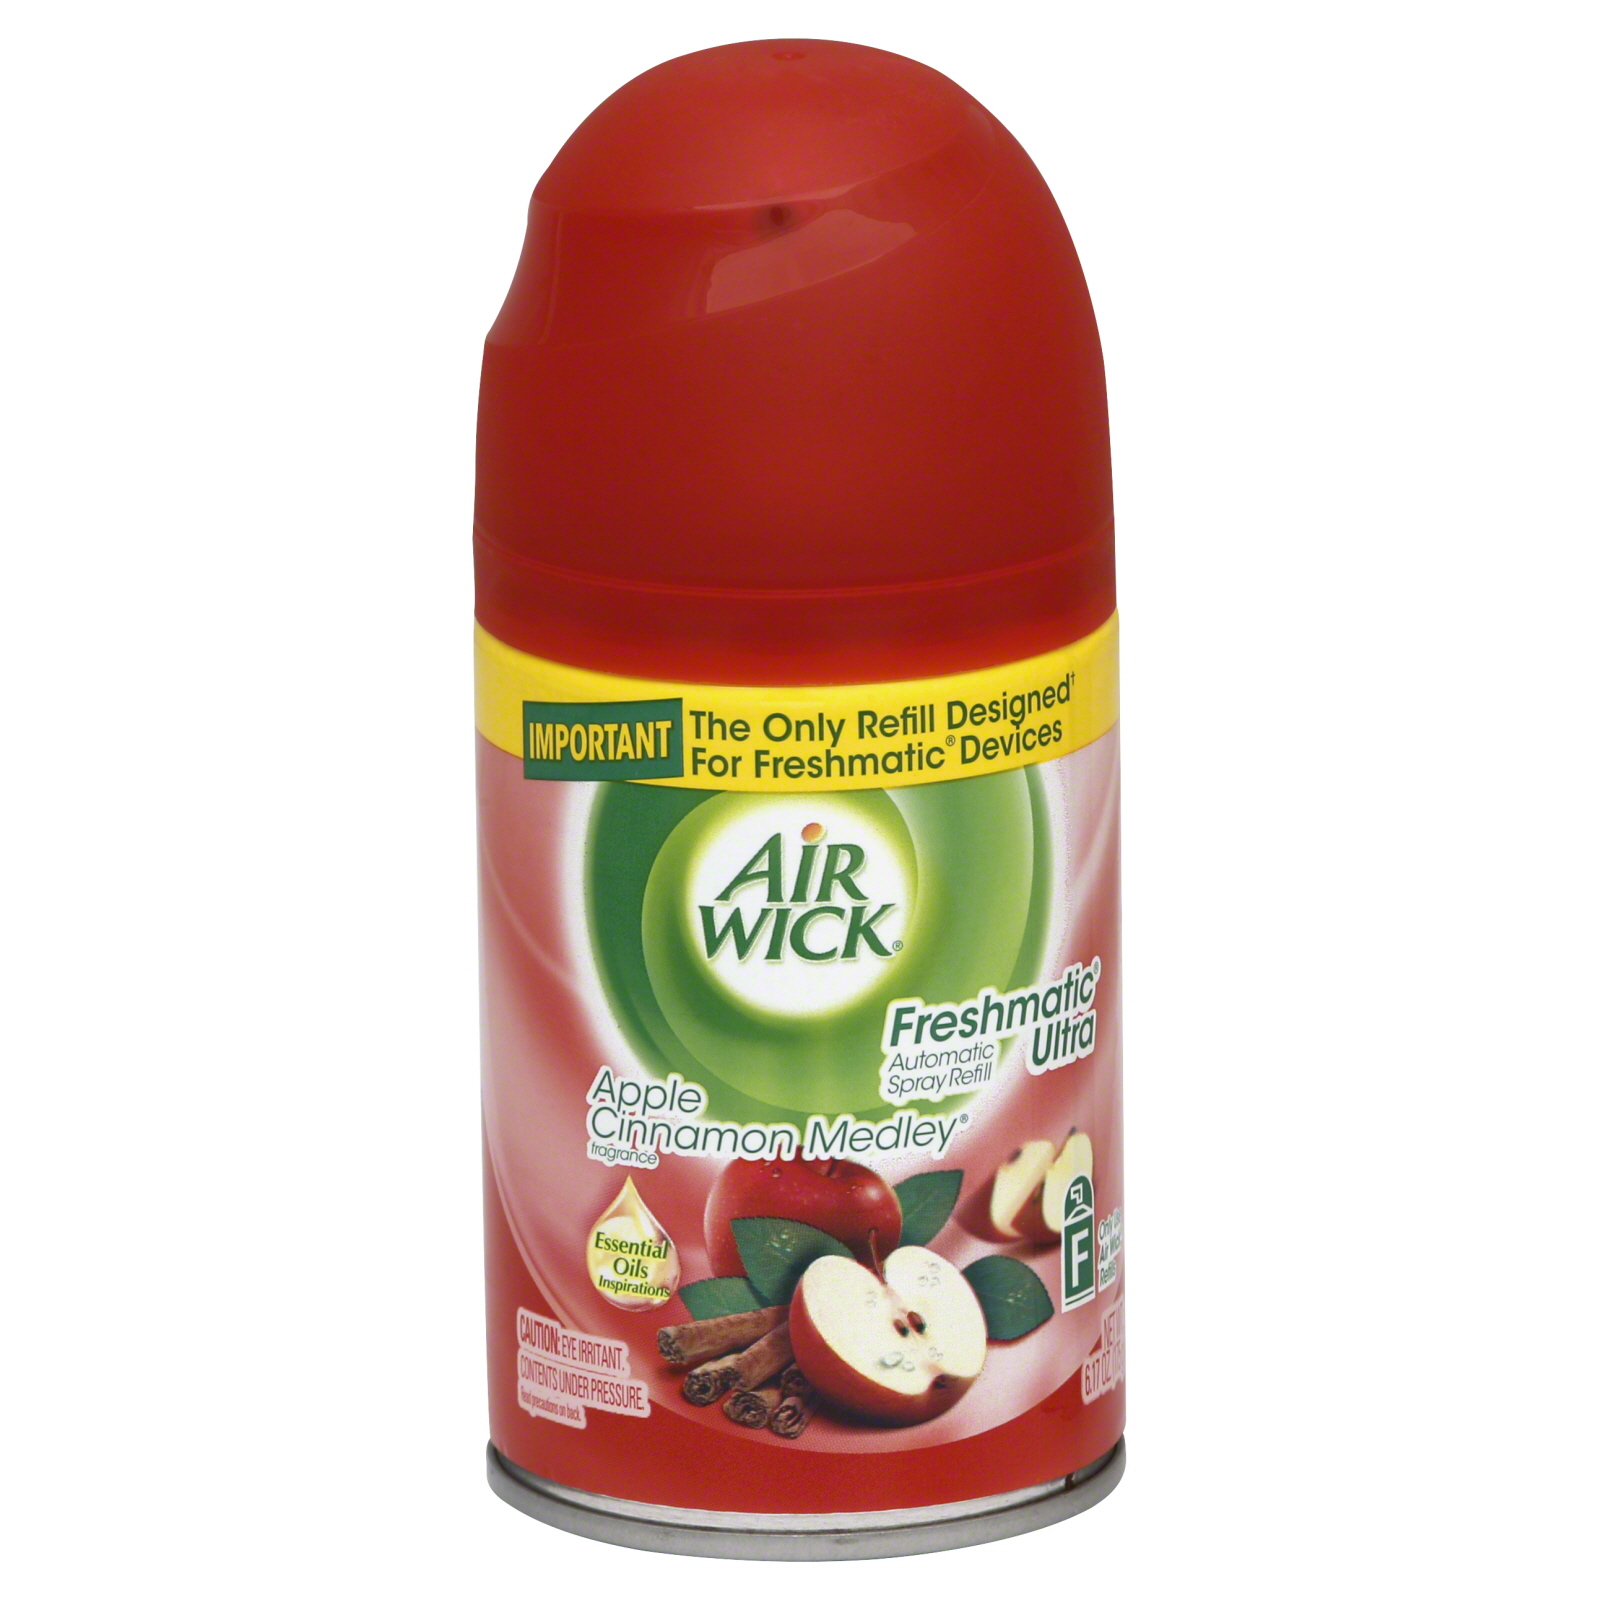 Airwick FreshMatic Ultra Automatic Spray, Refill, Harvest Spice, 6.17 oz (175 g)